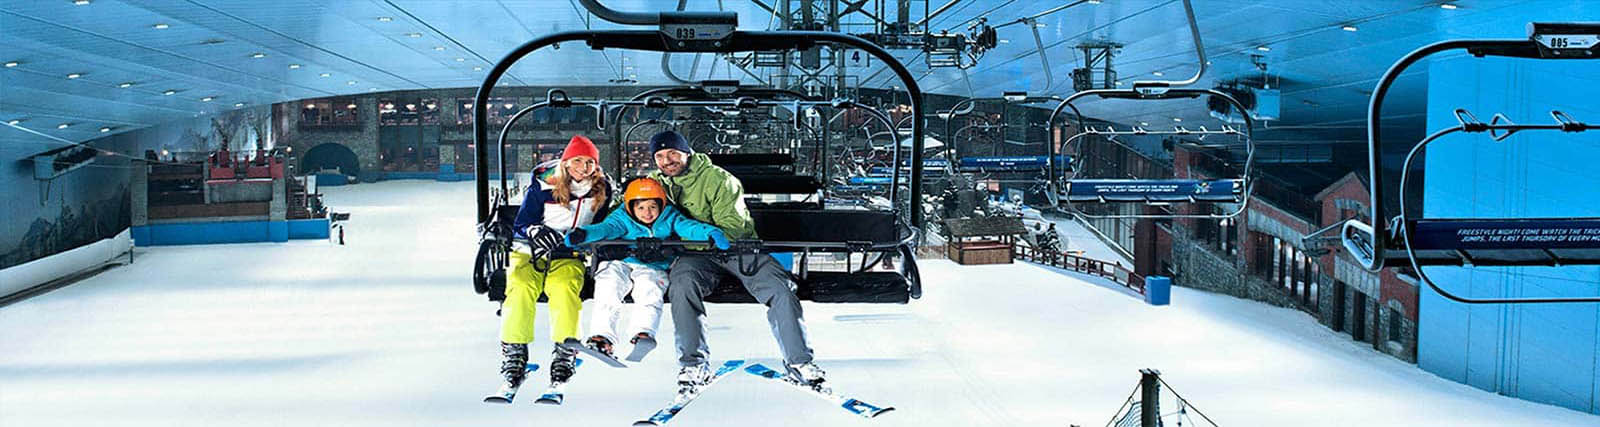 ski-dubai-snow-park